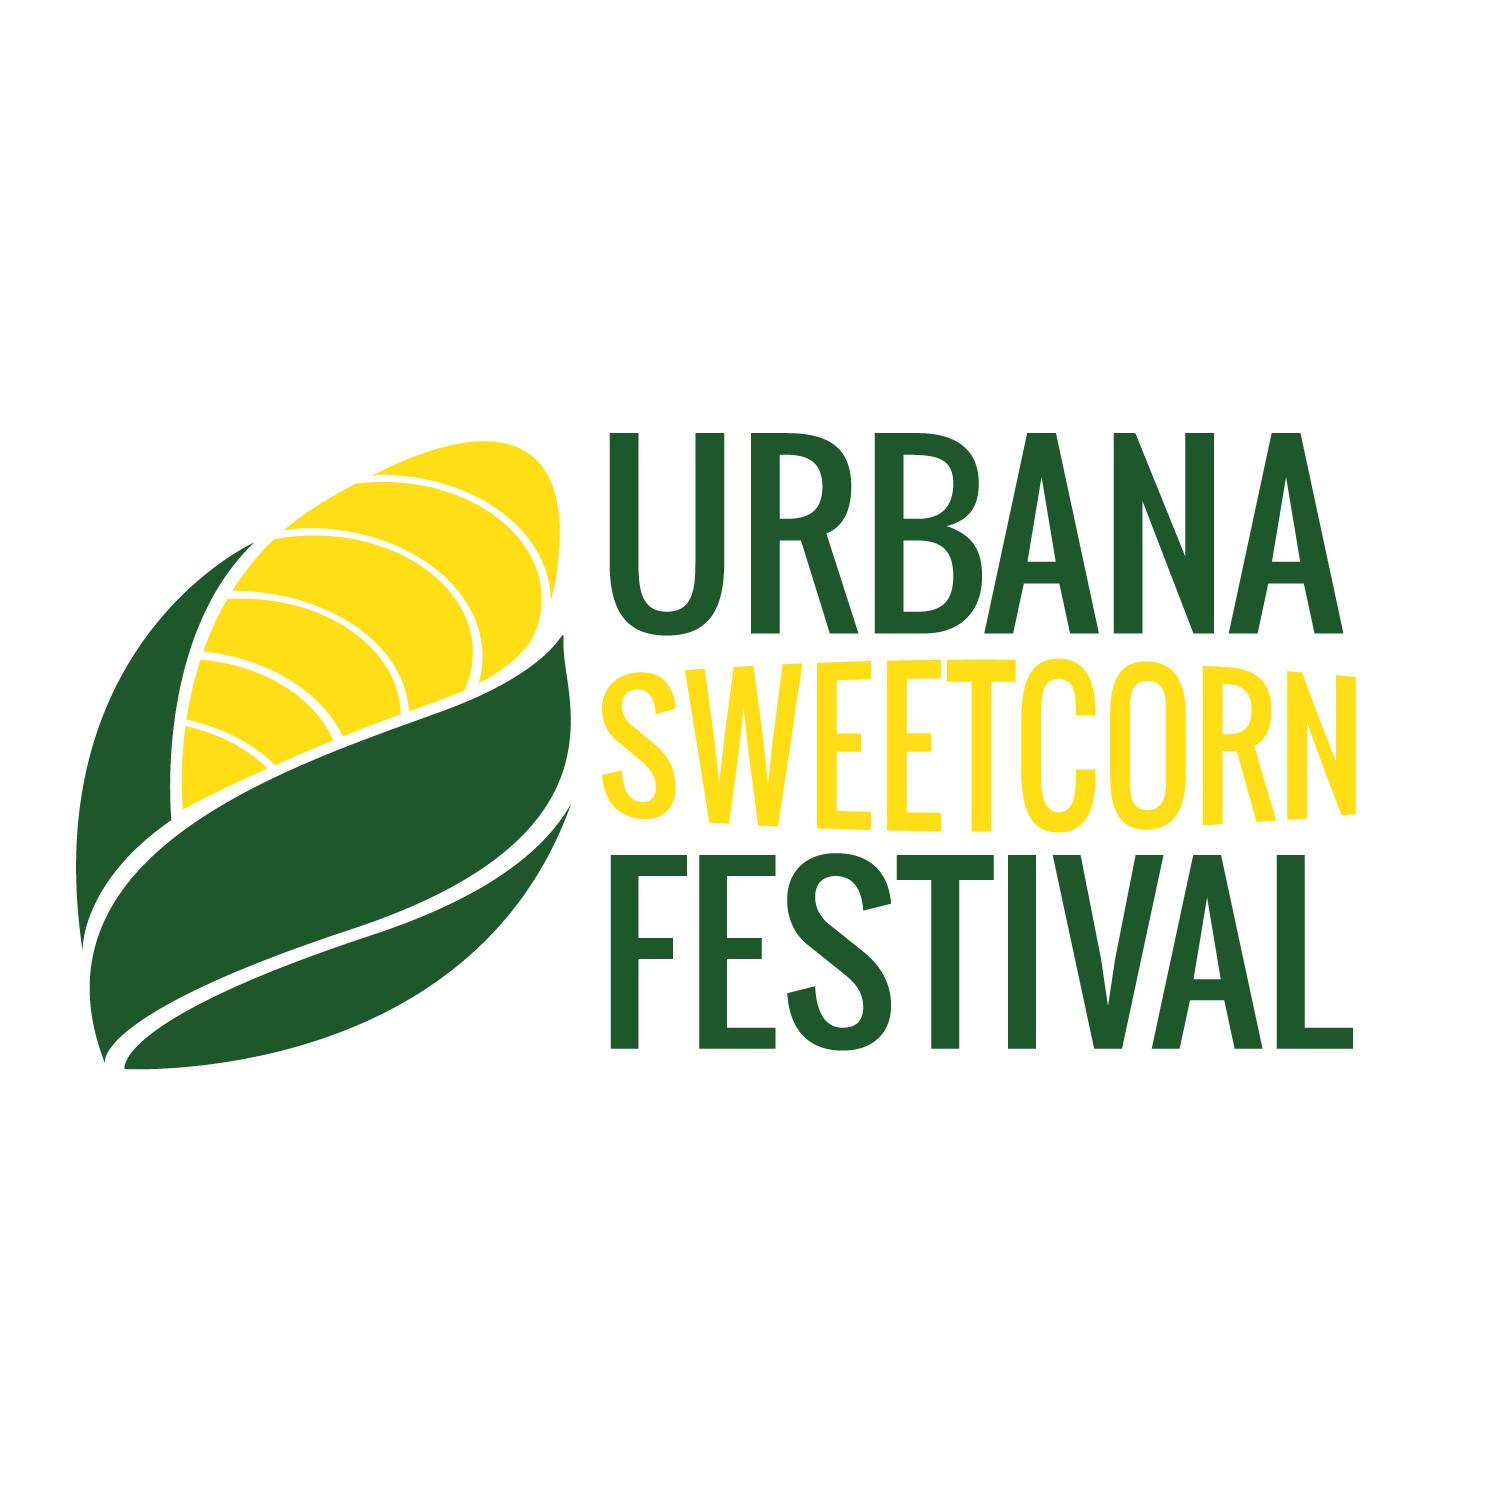 Urbana Sweetcorn Festival celebrates 40 years with new logo and website